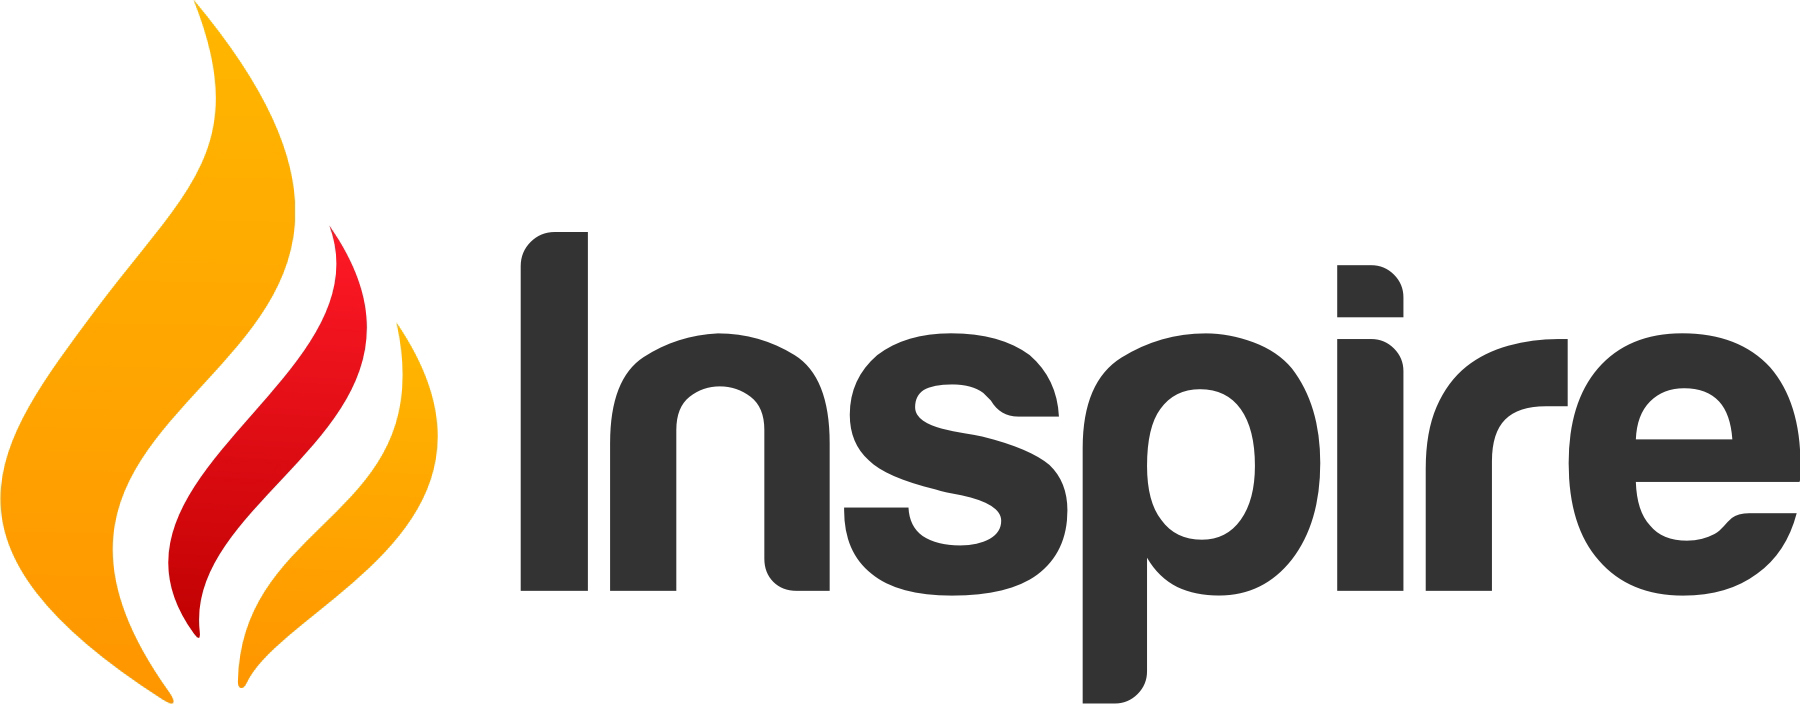 Inspire_logo_new